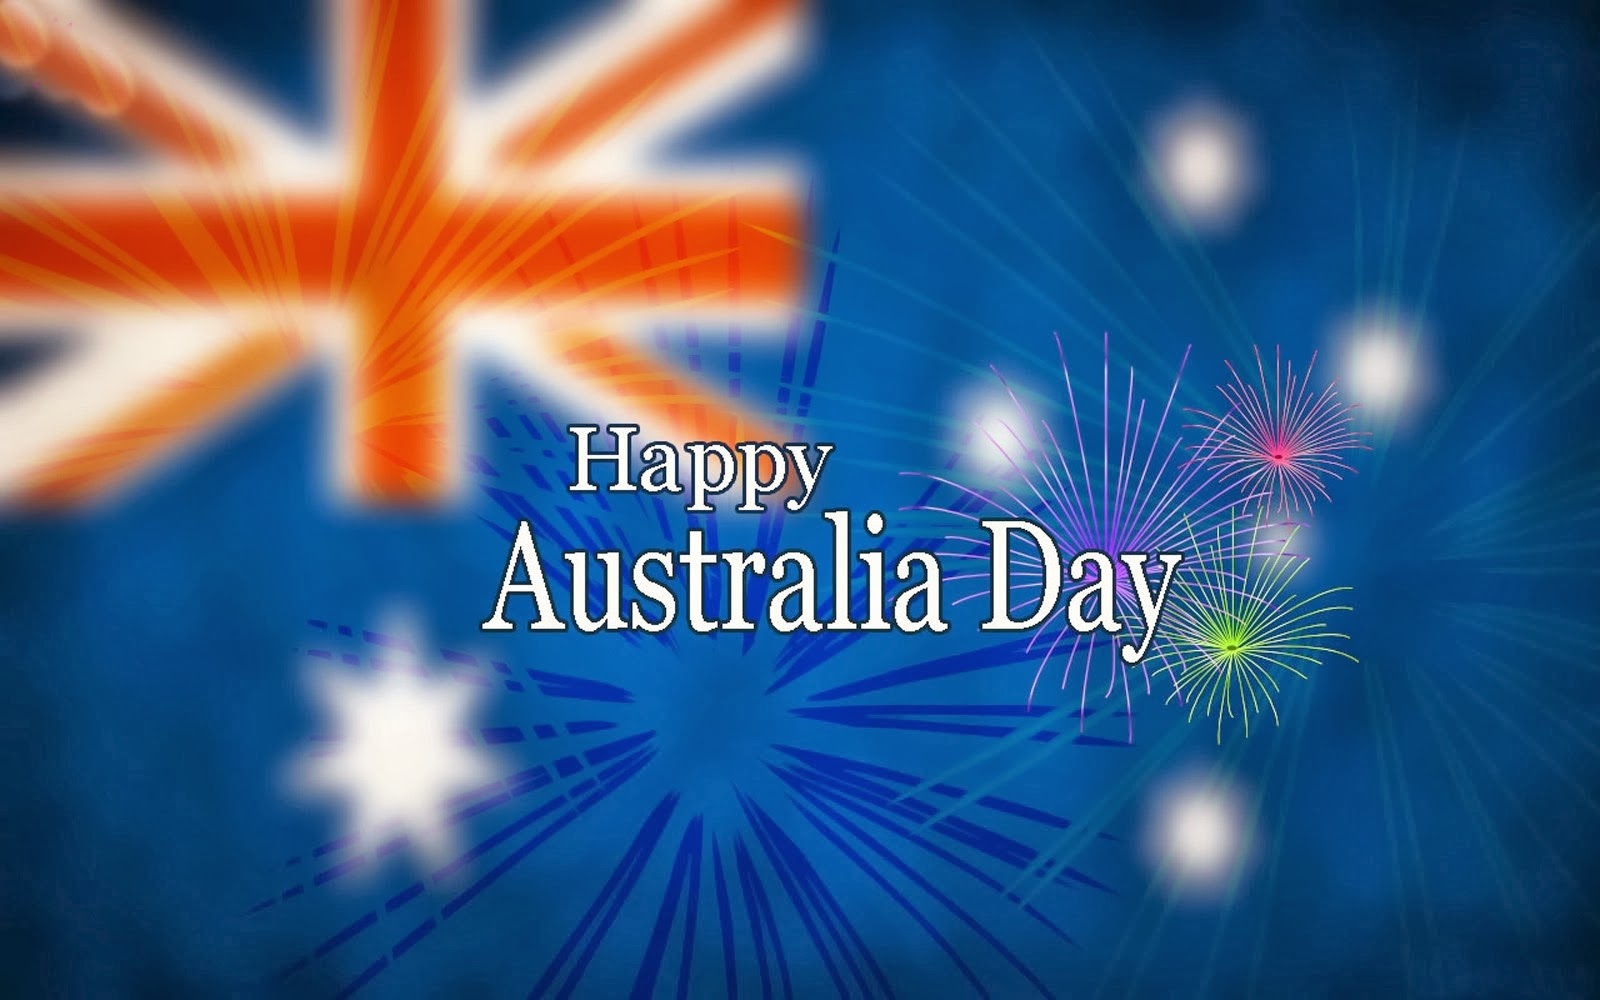 624292 descargar imagen día festivo, dia de australia: fondos de pantalla y protectores de pantalla gratis